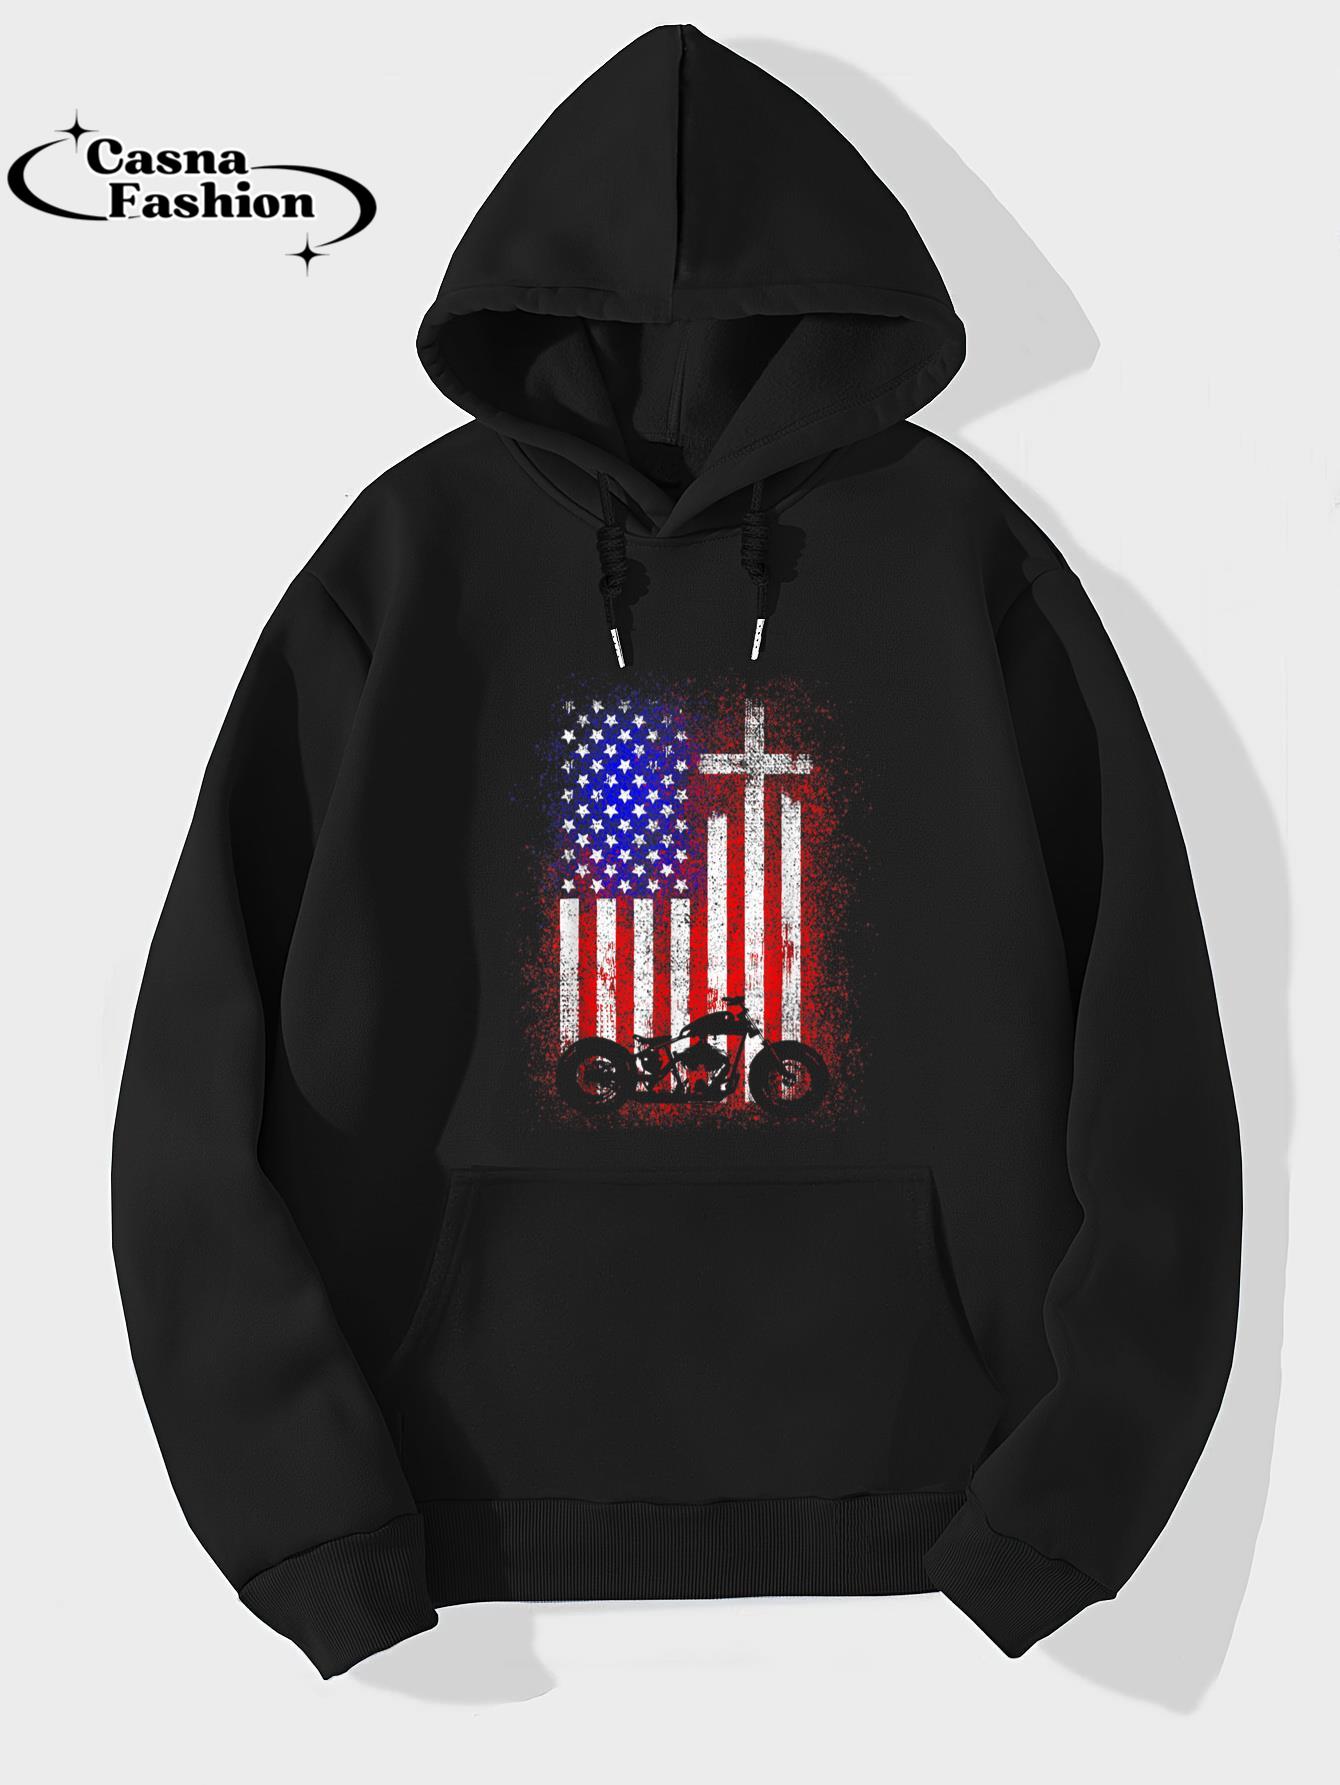 casnafashion_Hoodie_Vintage Motor Bike USA Flag Christian Faith for Bikers T-Shirt_hoodie_black hoodie